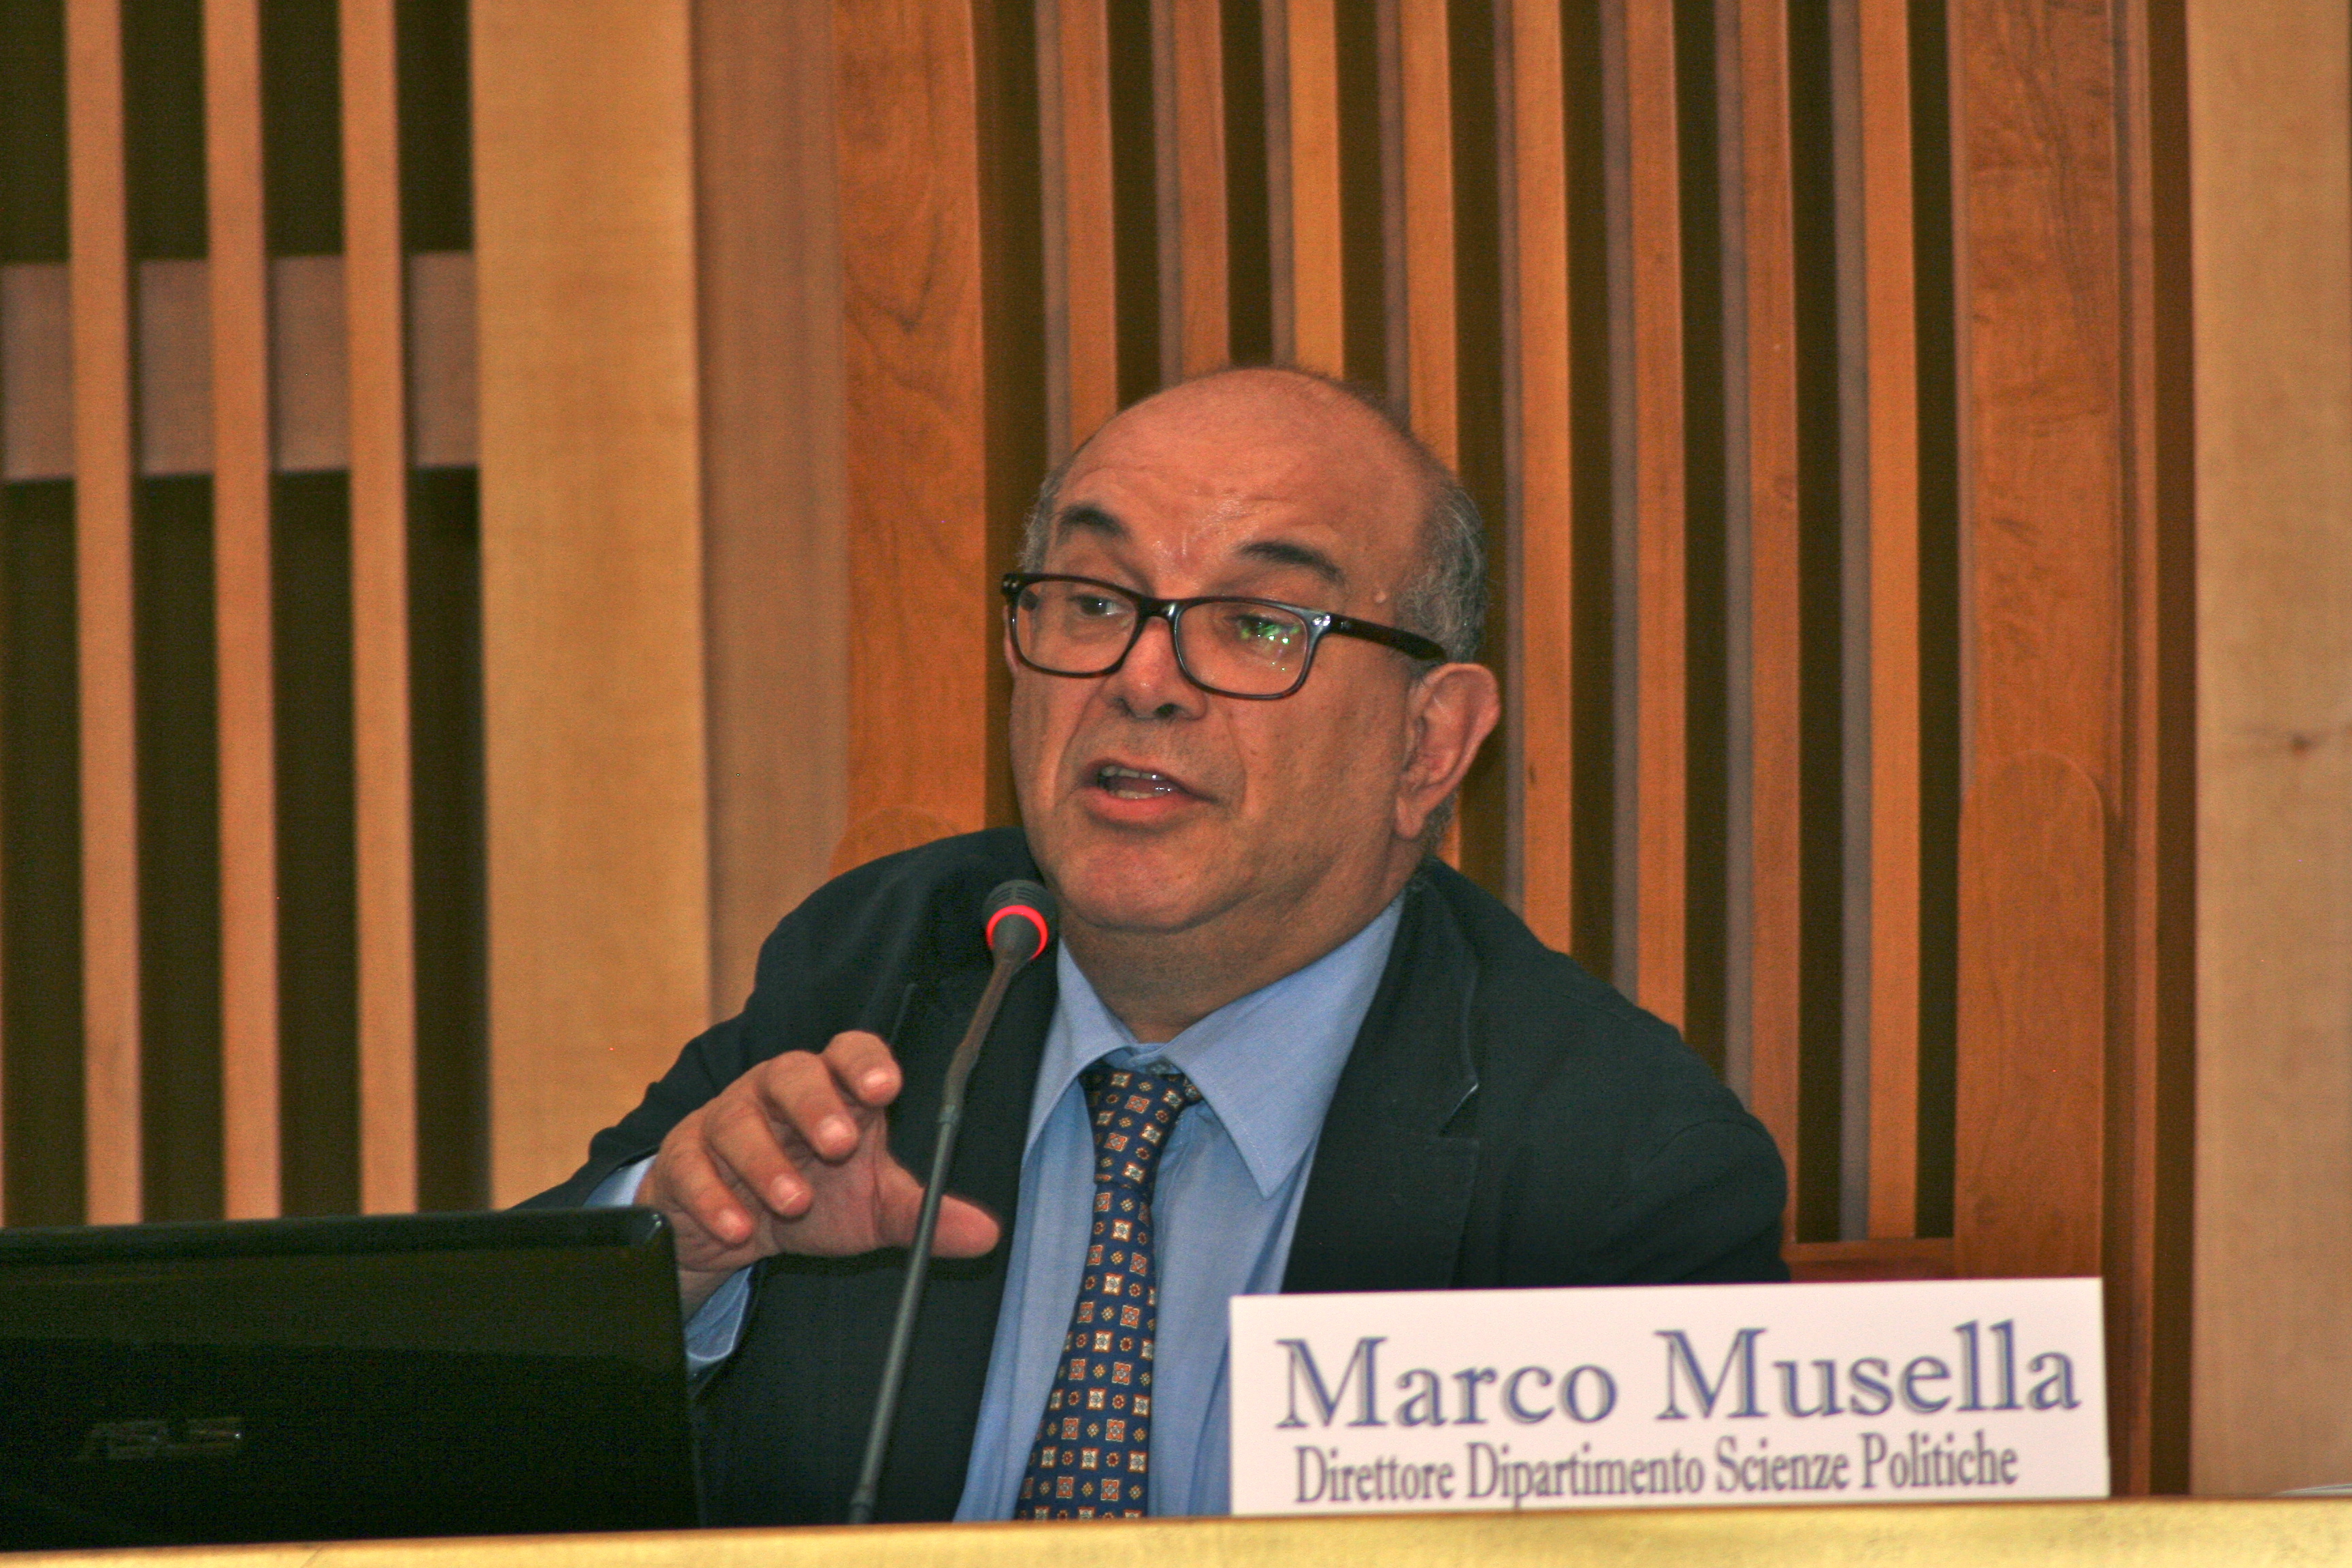 Marco Musella